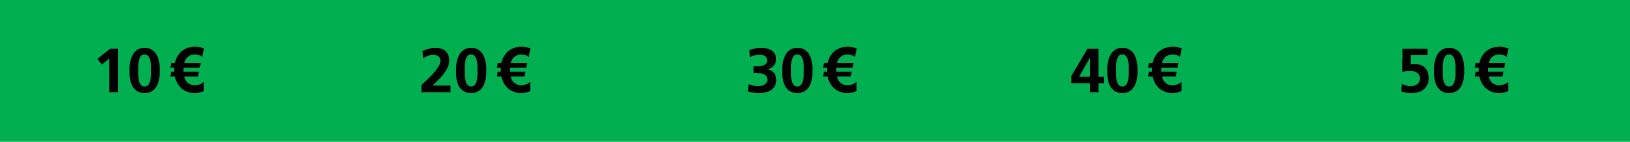 50er 50 Euro